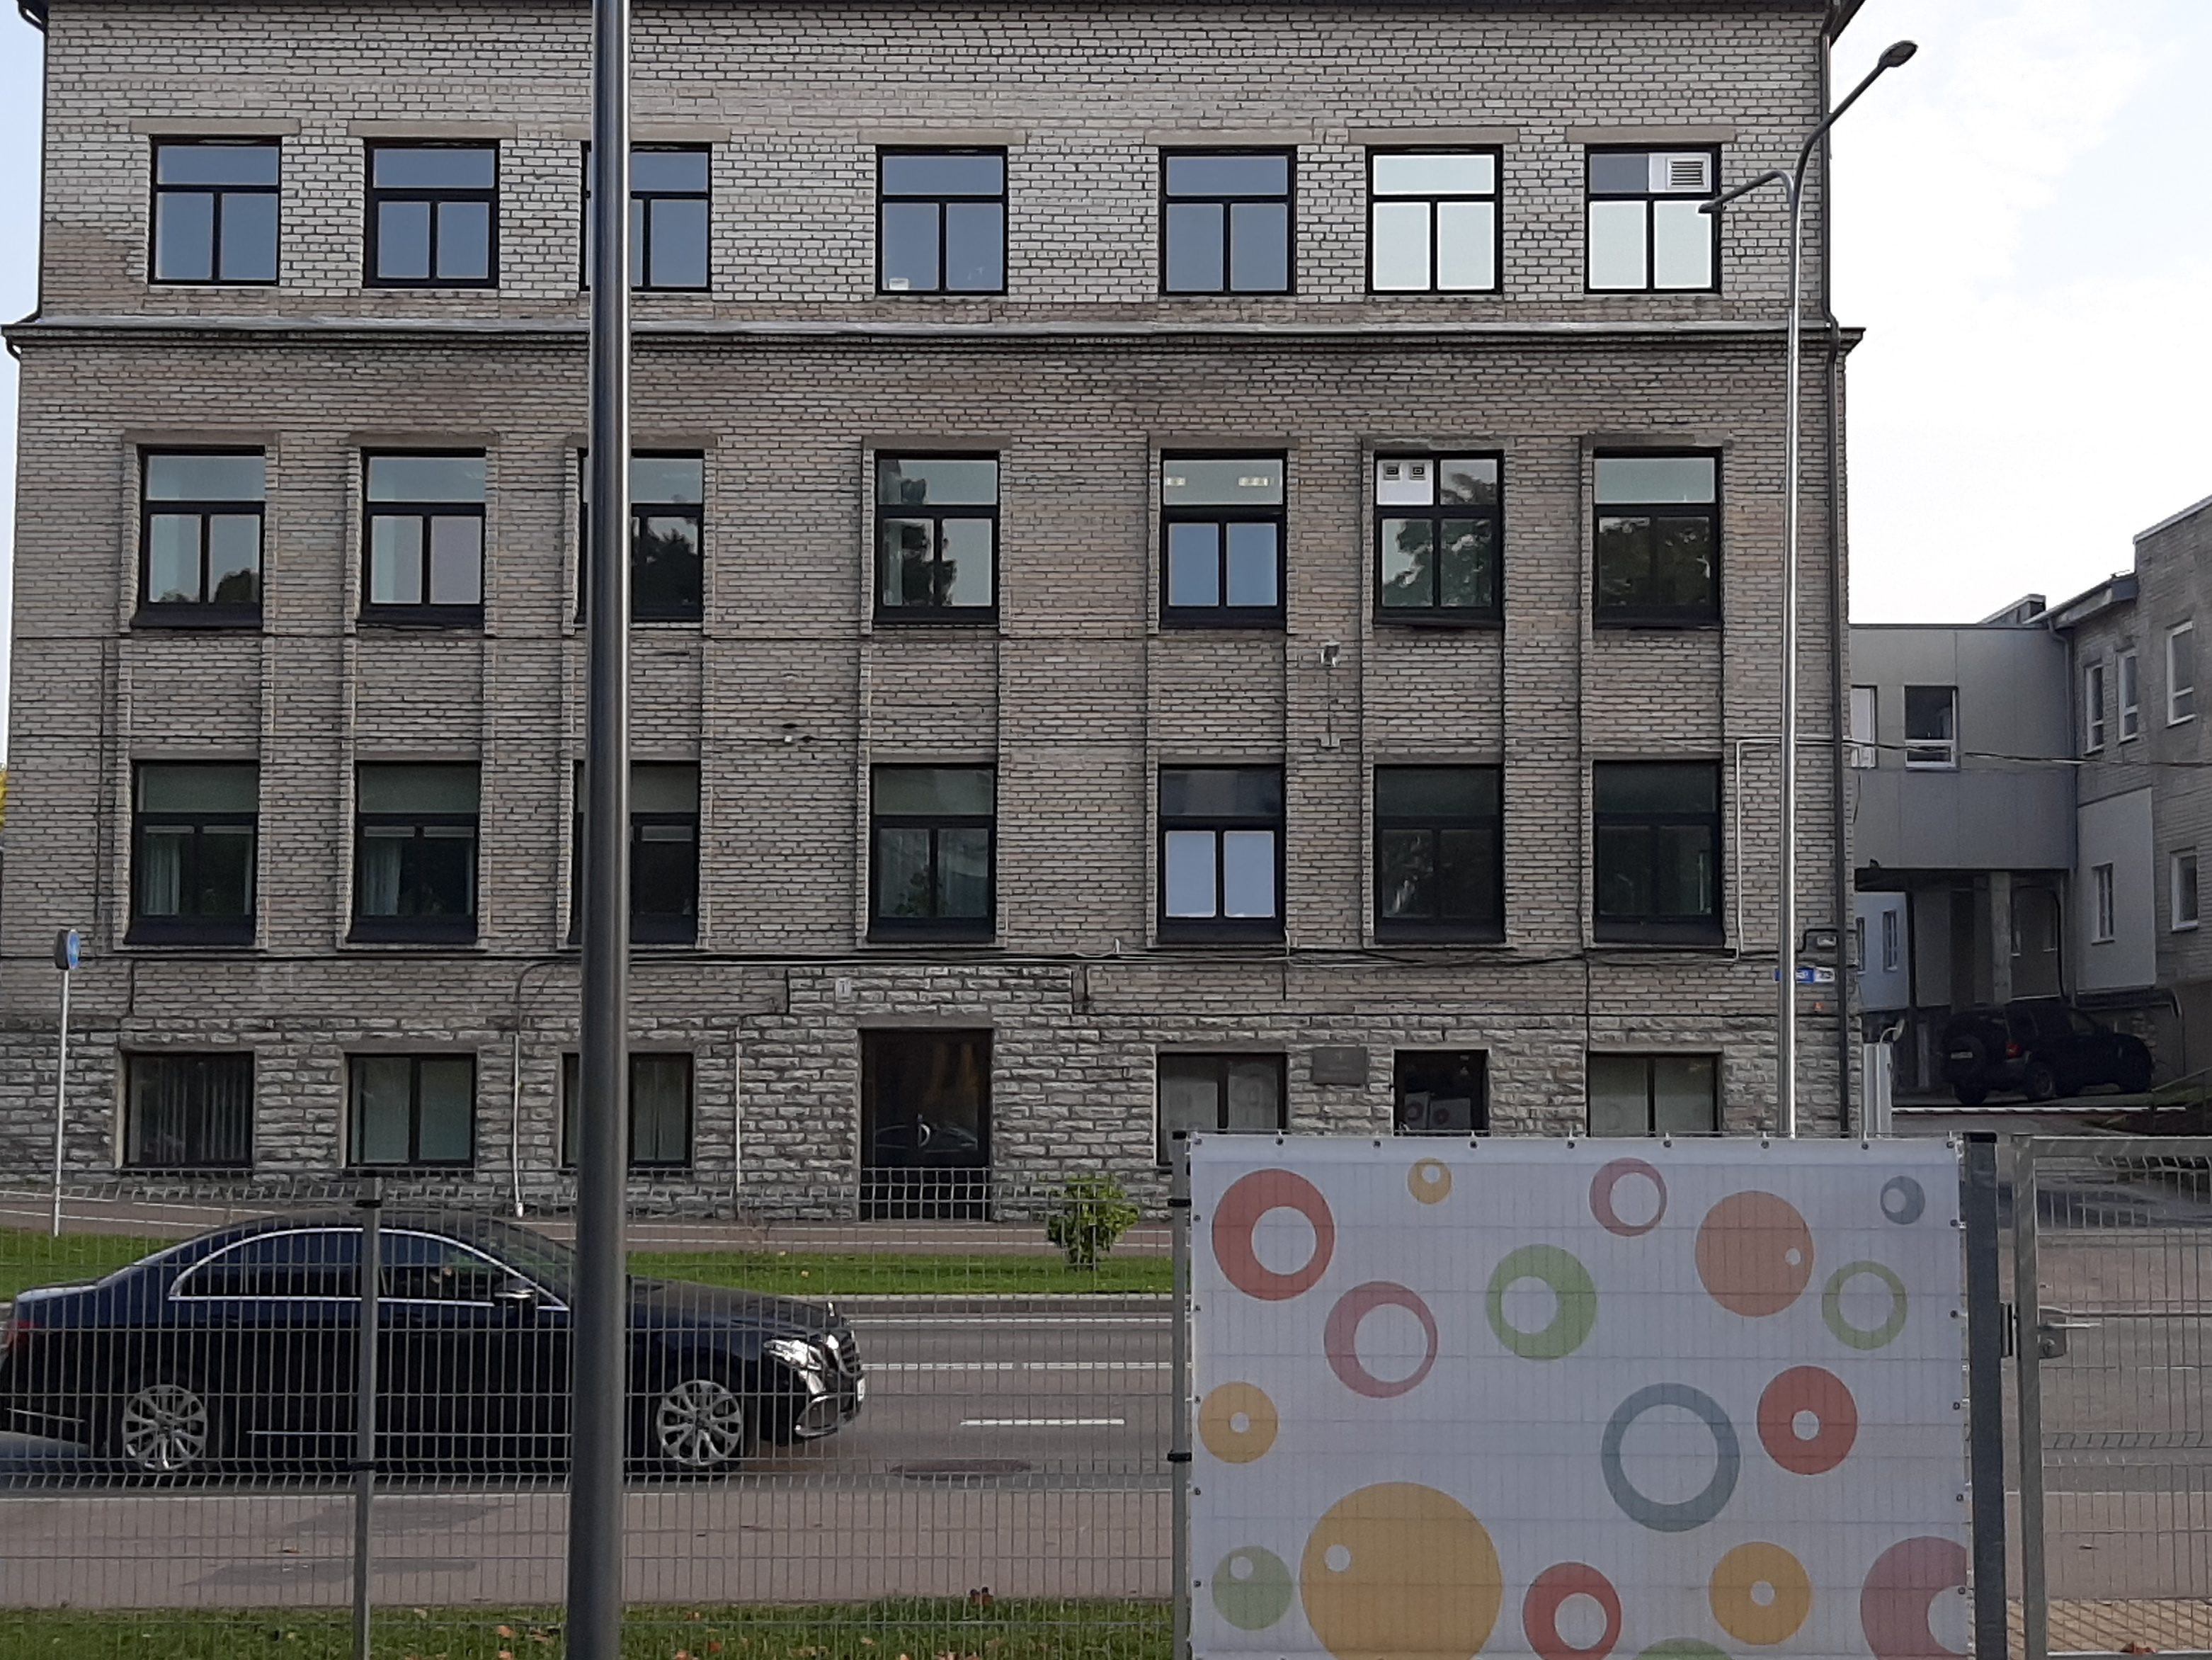 Main building of the Tallinn Farmacy Factory rephoto